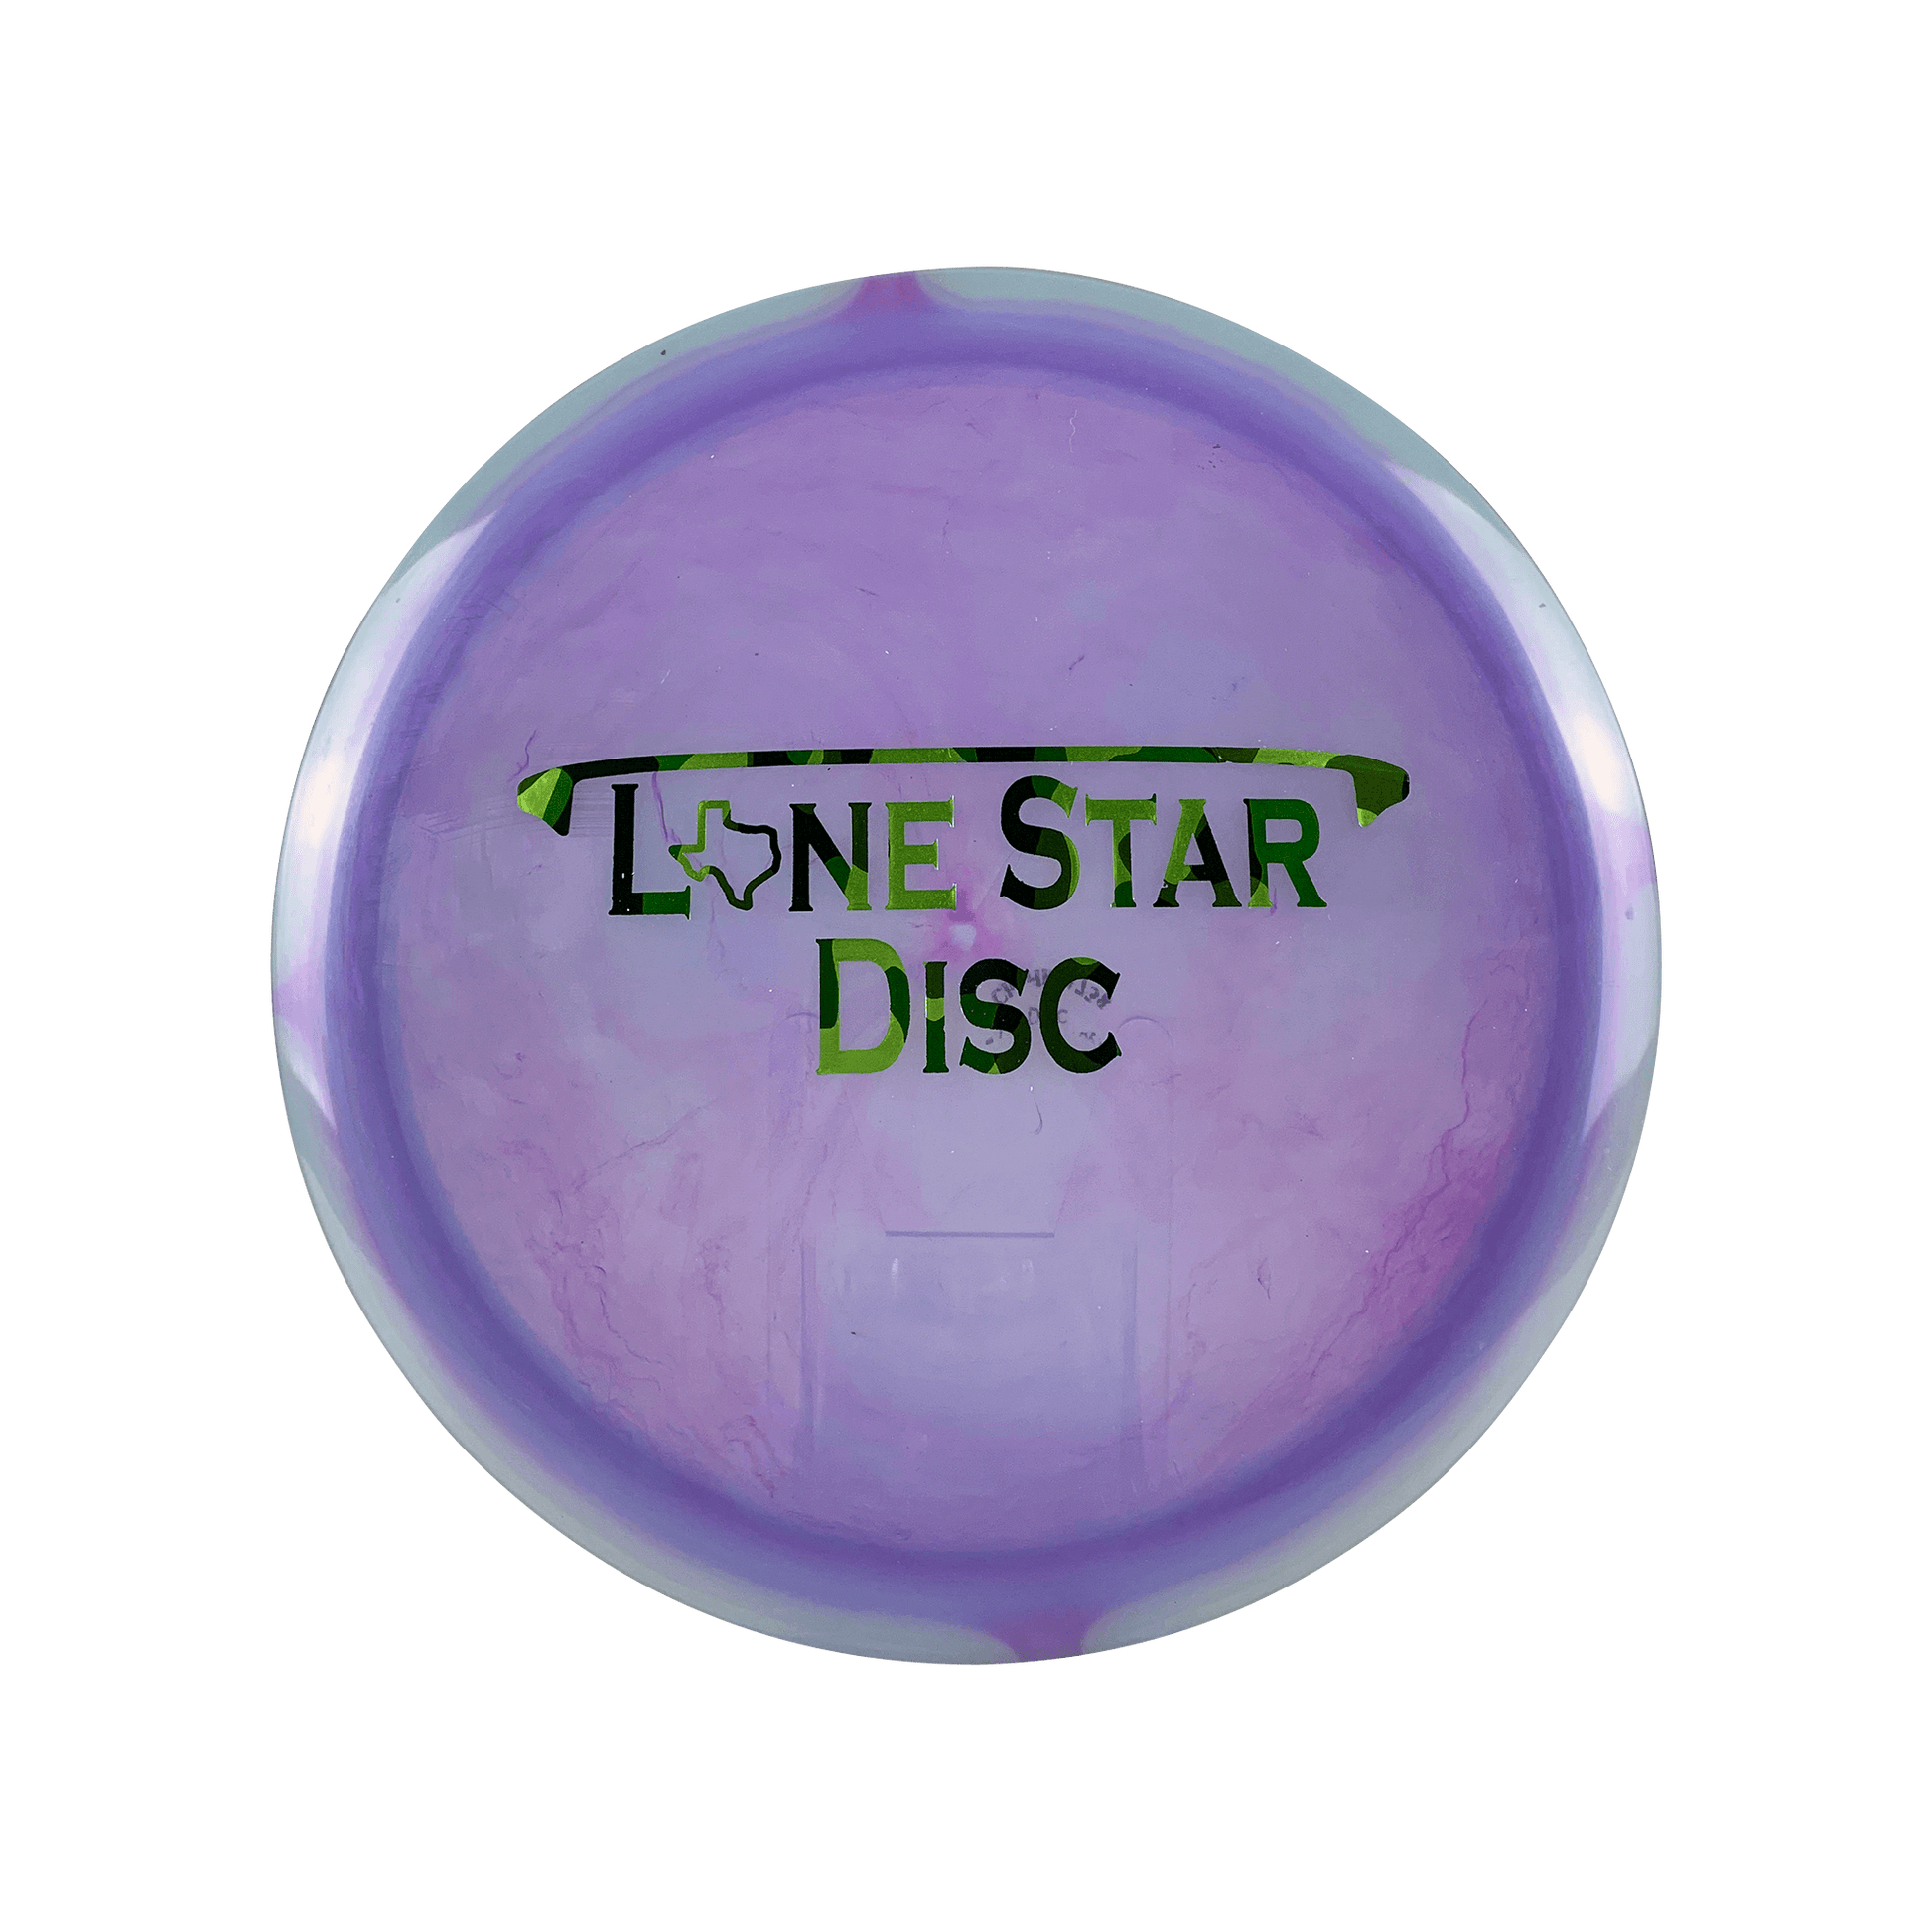 Charlie Frio - Lone Star Bar Stamp Disc Lonestar Disc multi / purple 173 